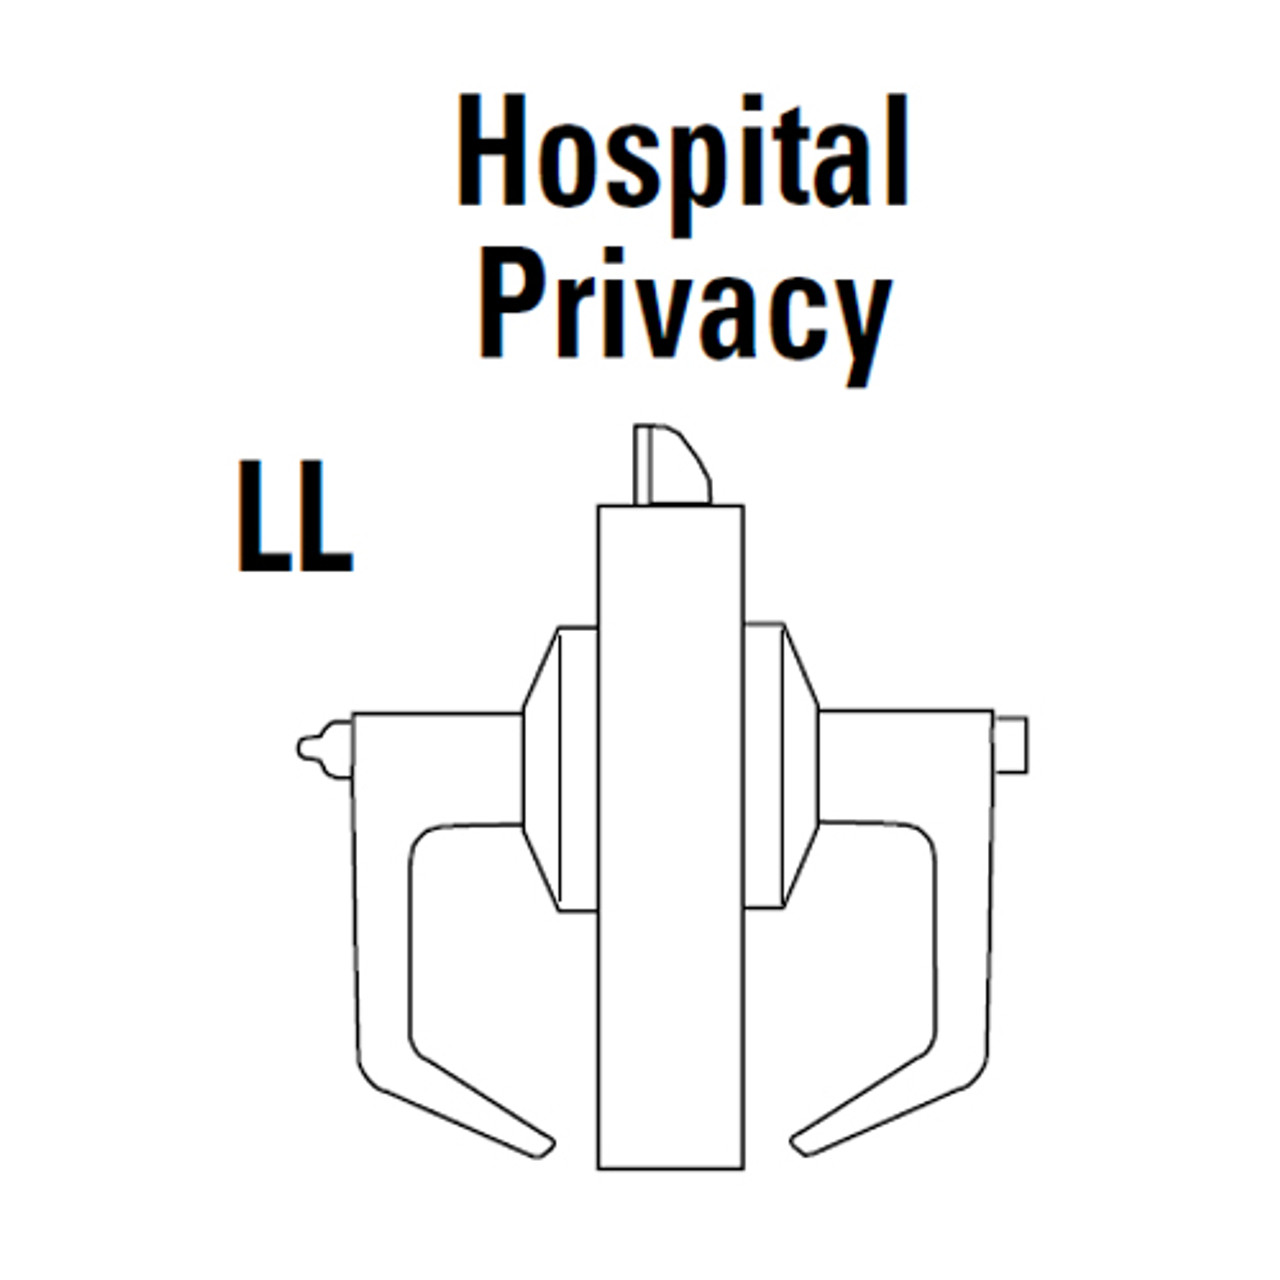 9K30LL14KS3626 Best 9K Series Hospital Privacy Heavy Duty Cylindrical Lever Locks in Satin Chrome